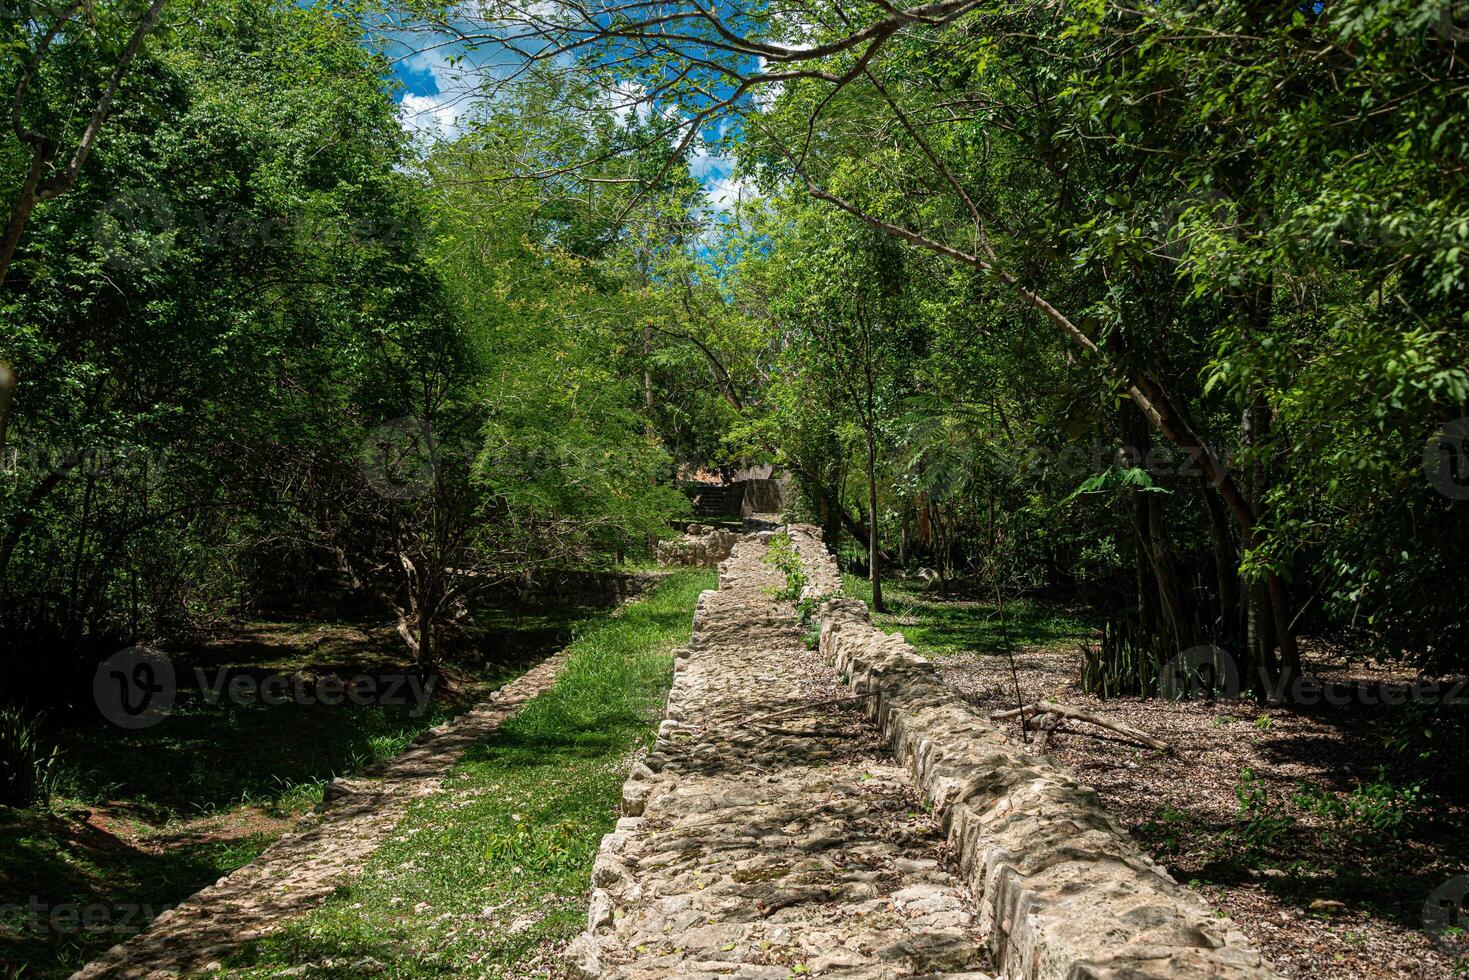 ancien chichen Itza mur, Yucatan, Mexique photo